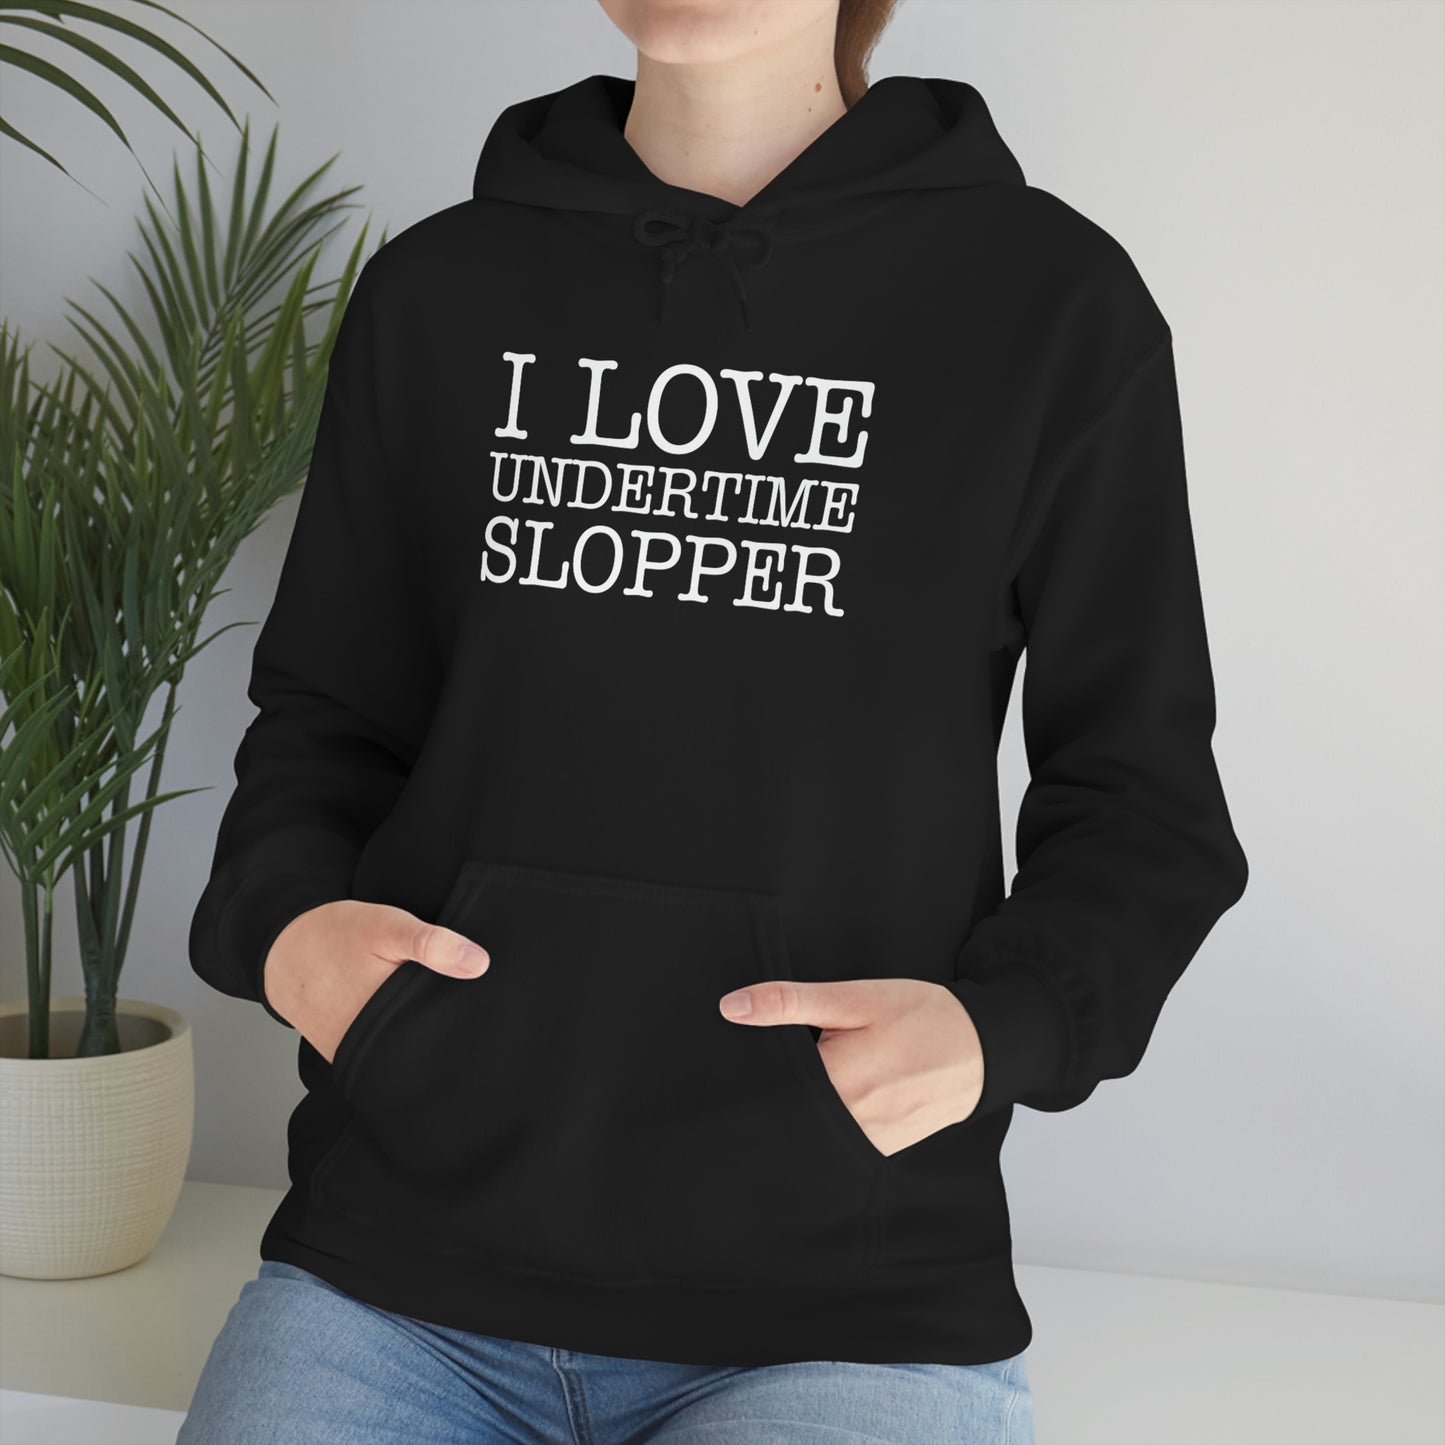 I love Undertime Slopper (White Text) Hoodie | Official Undertime Slopper Hoodie